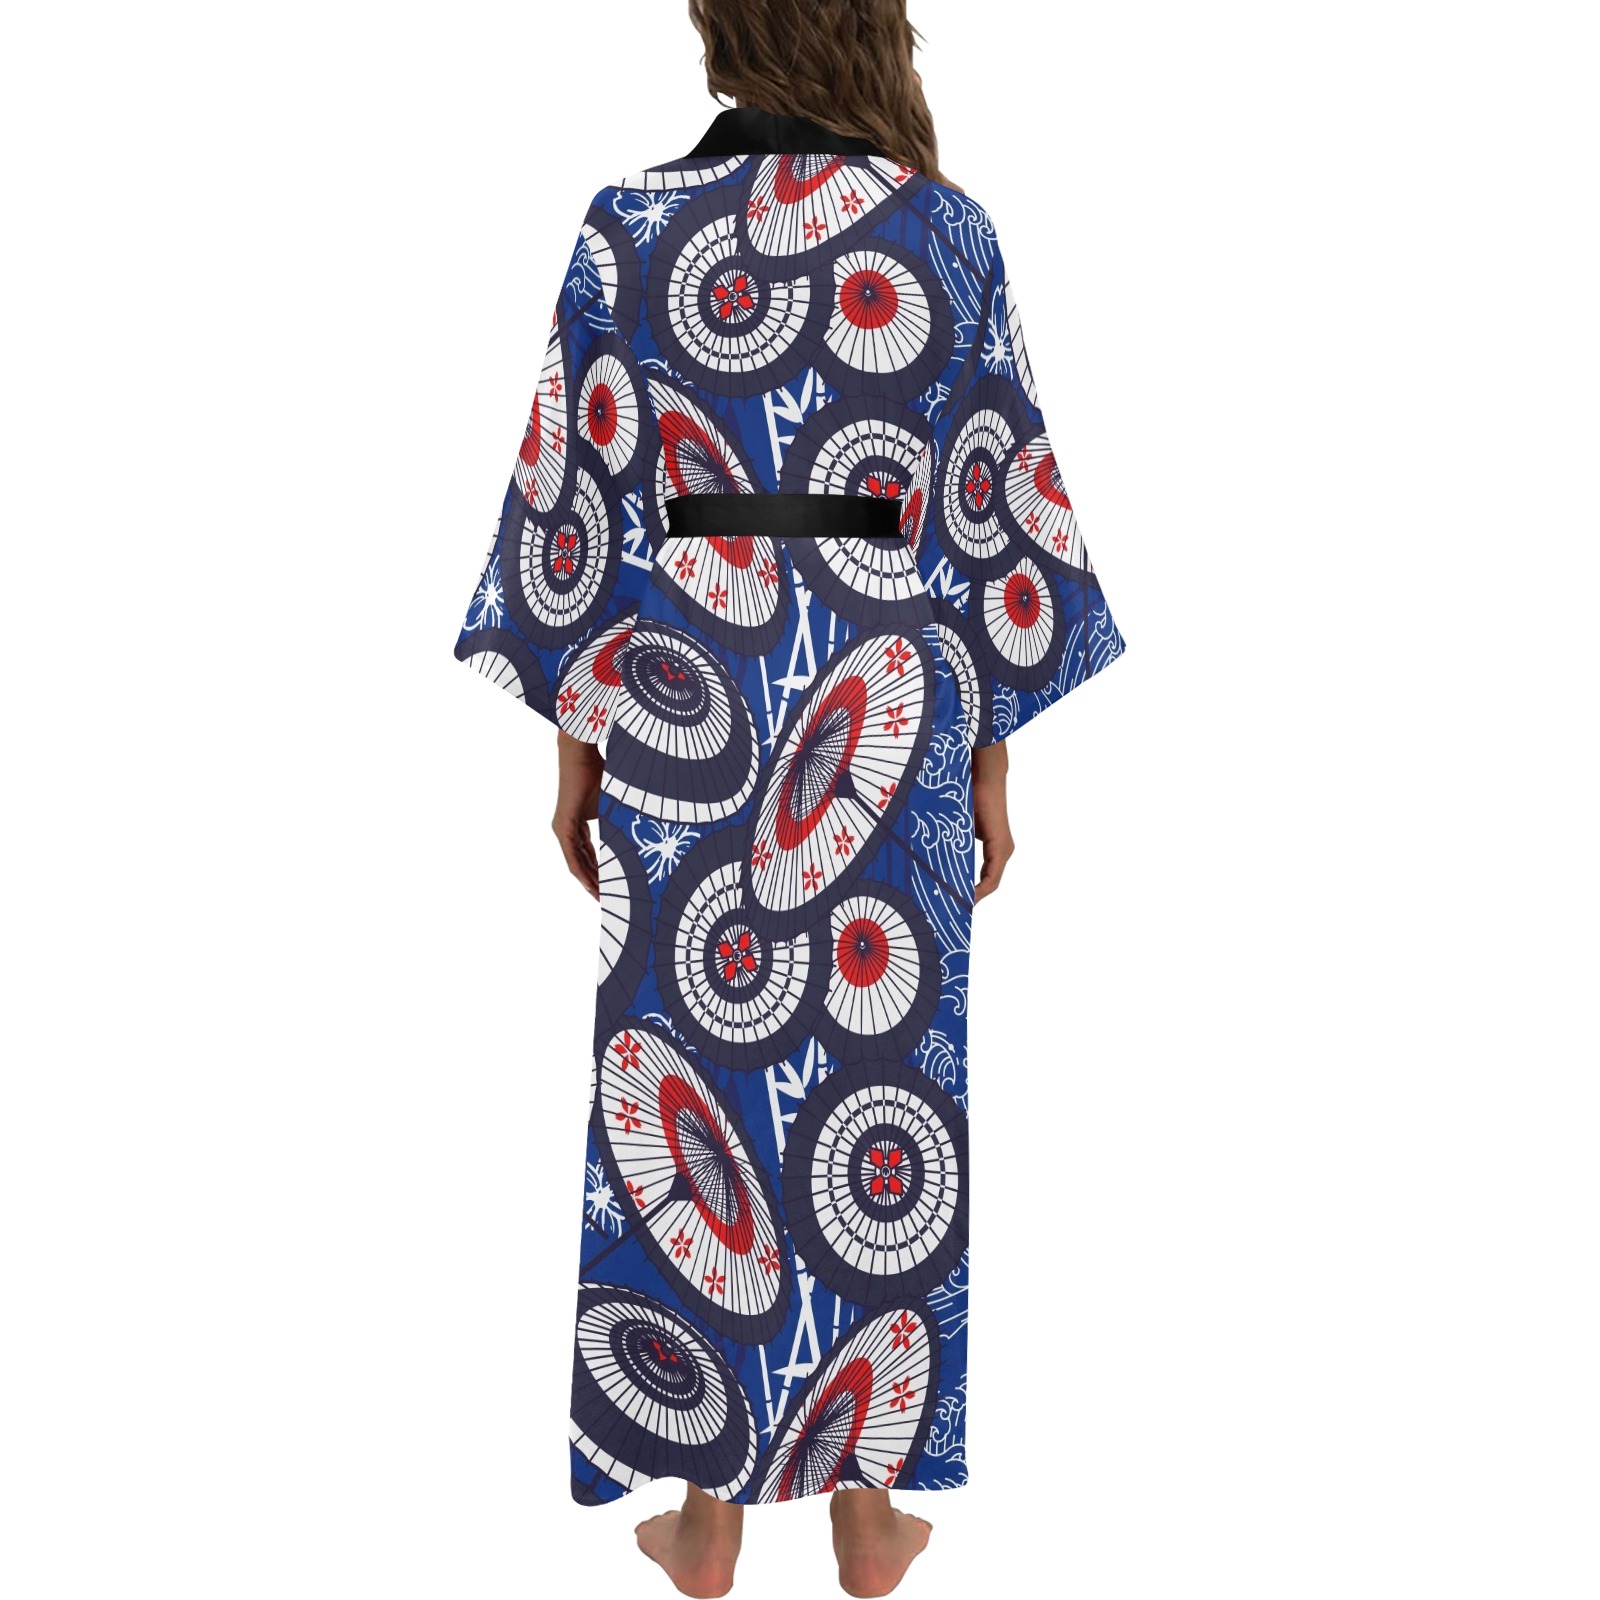 UMBRELLA 0001 Long Kimono Robe